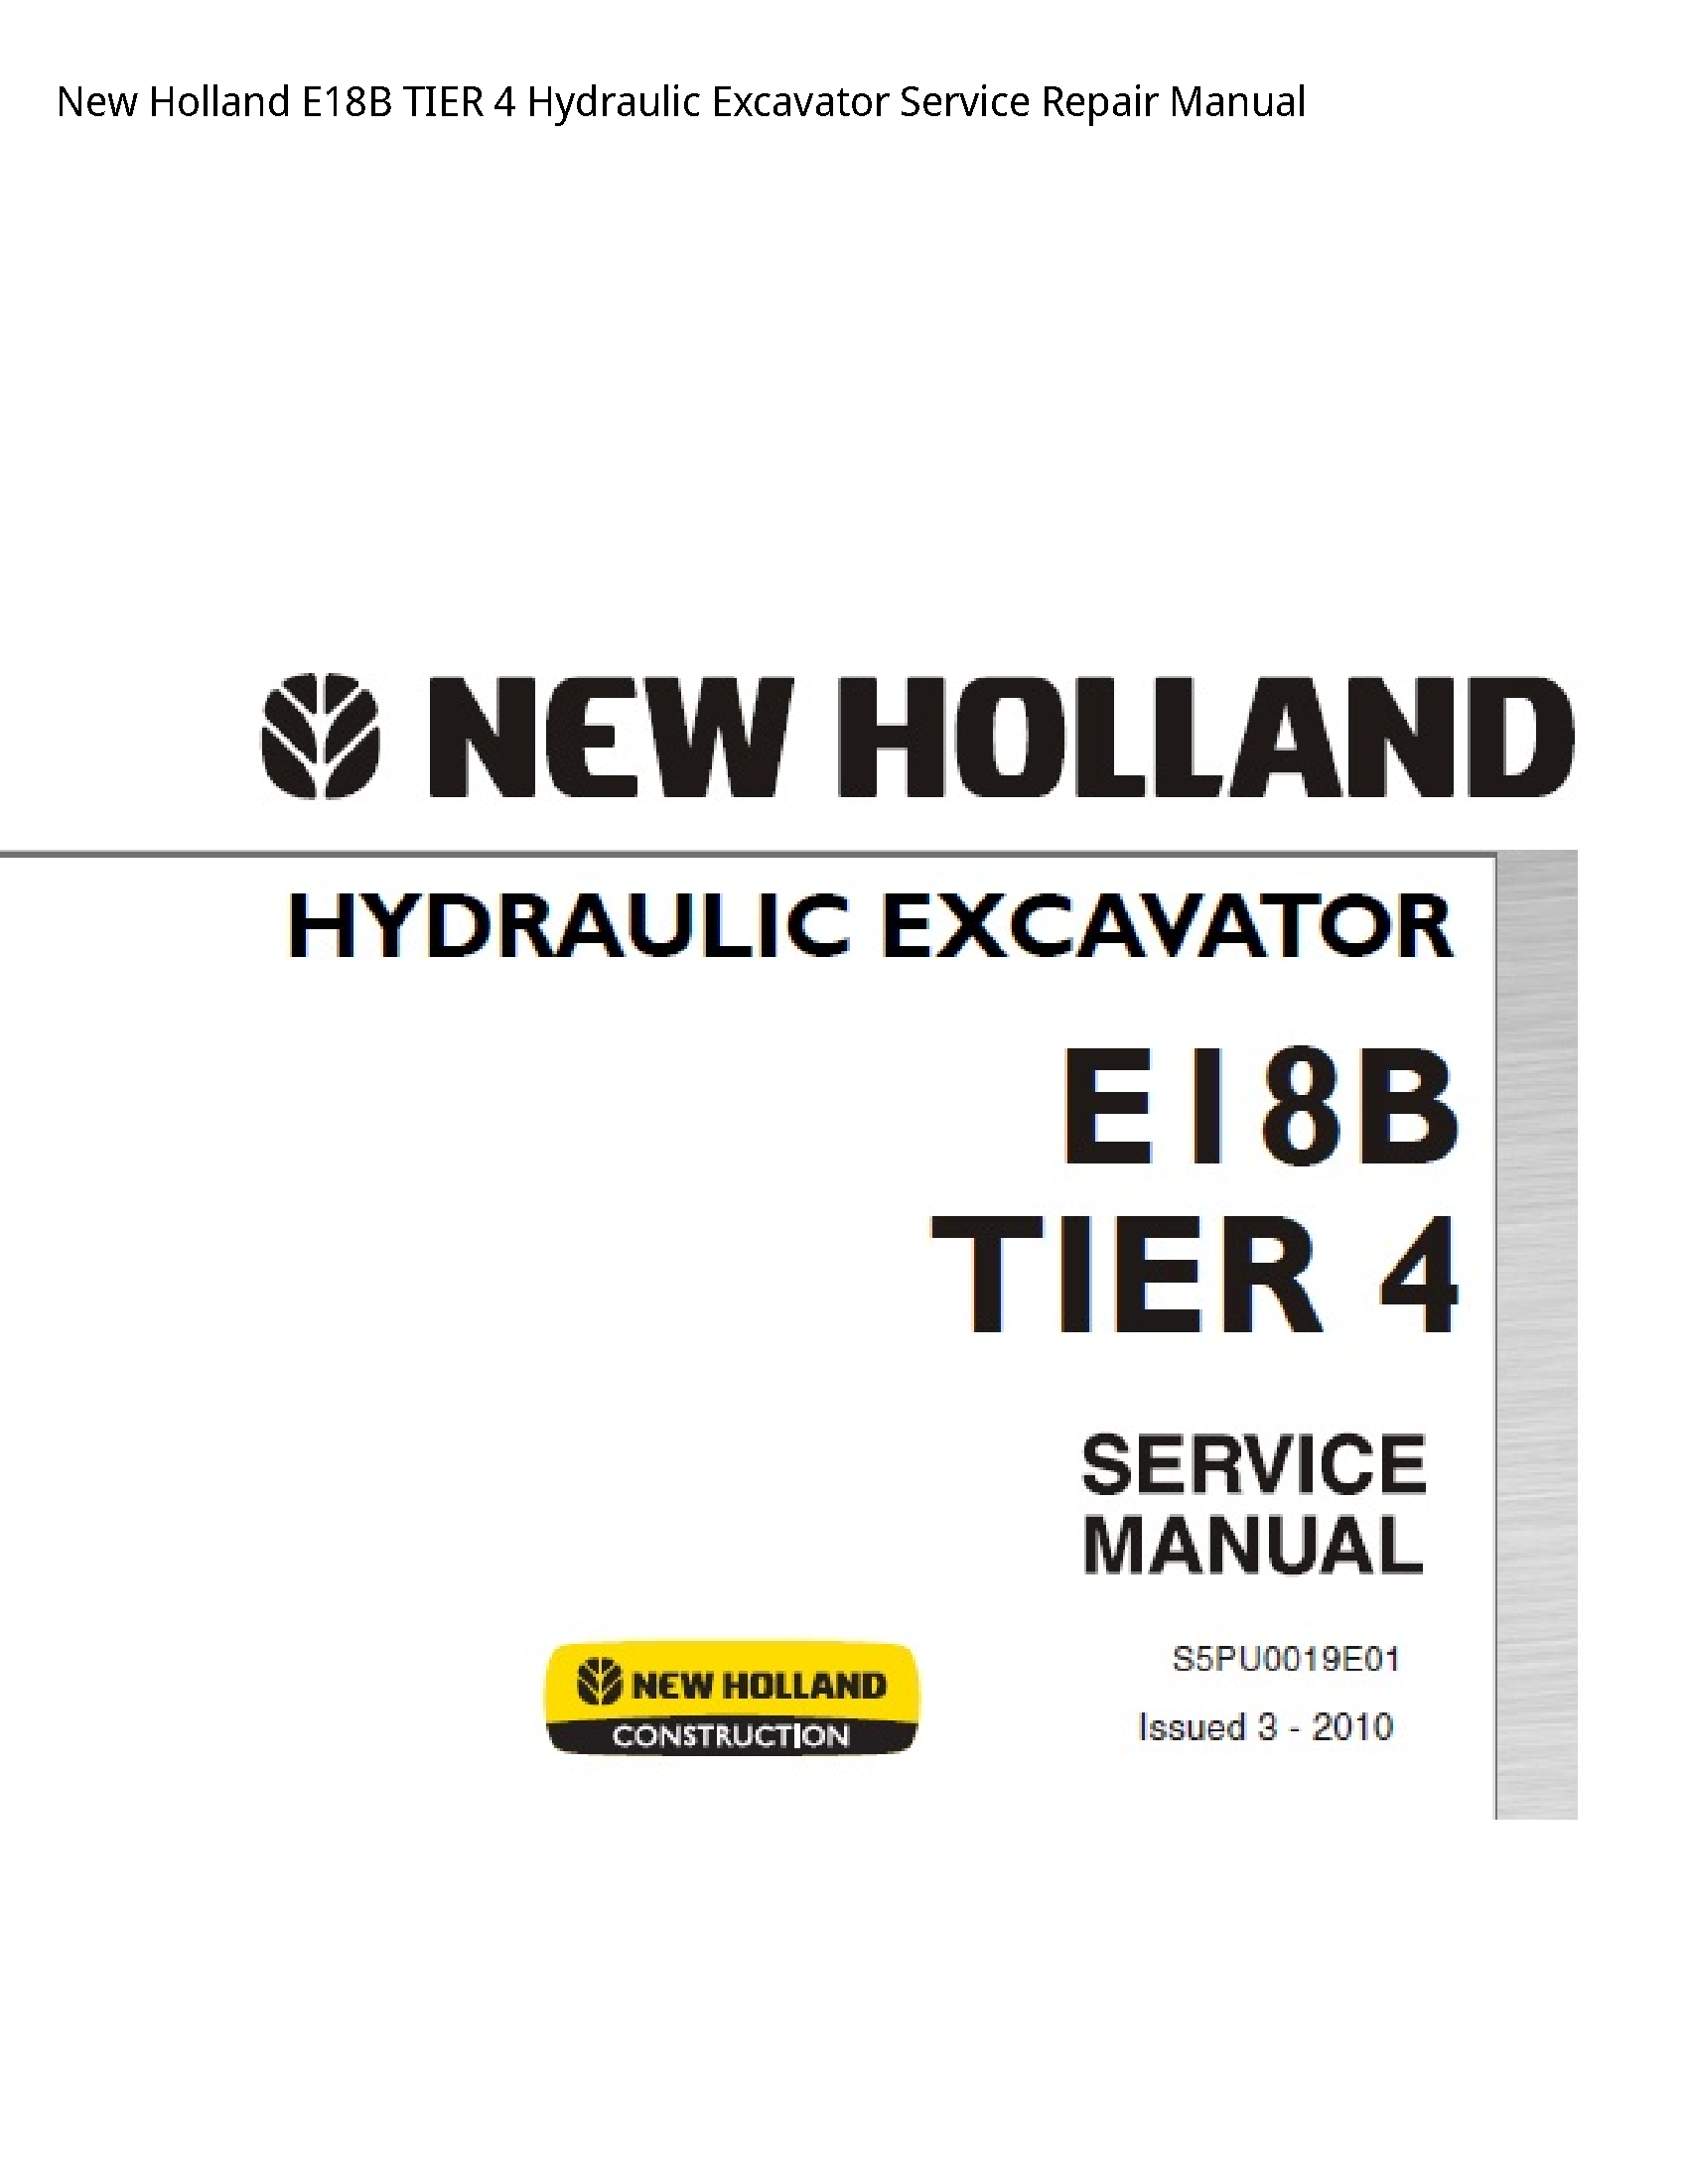 New Holland E18B TIER Hydraulic Excavator manual